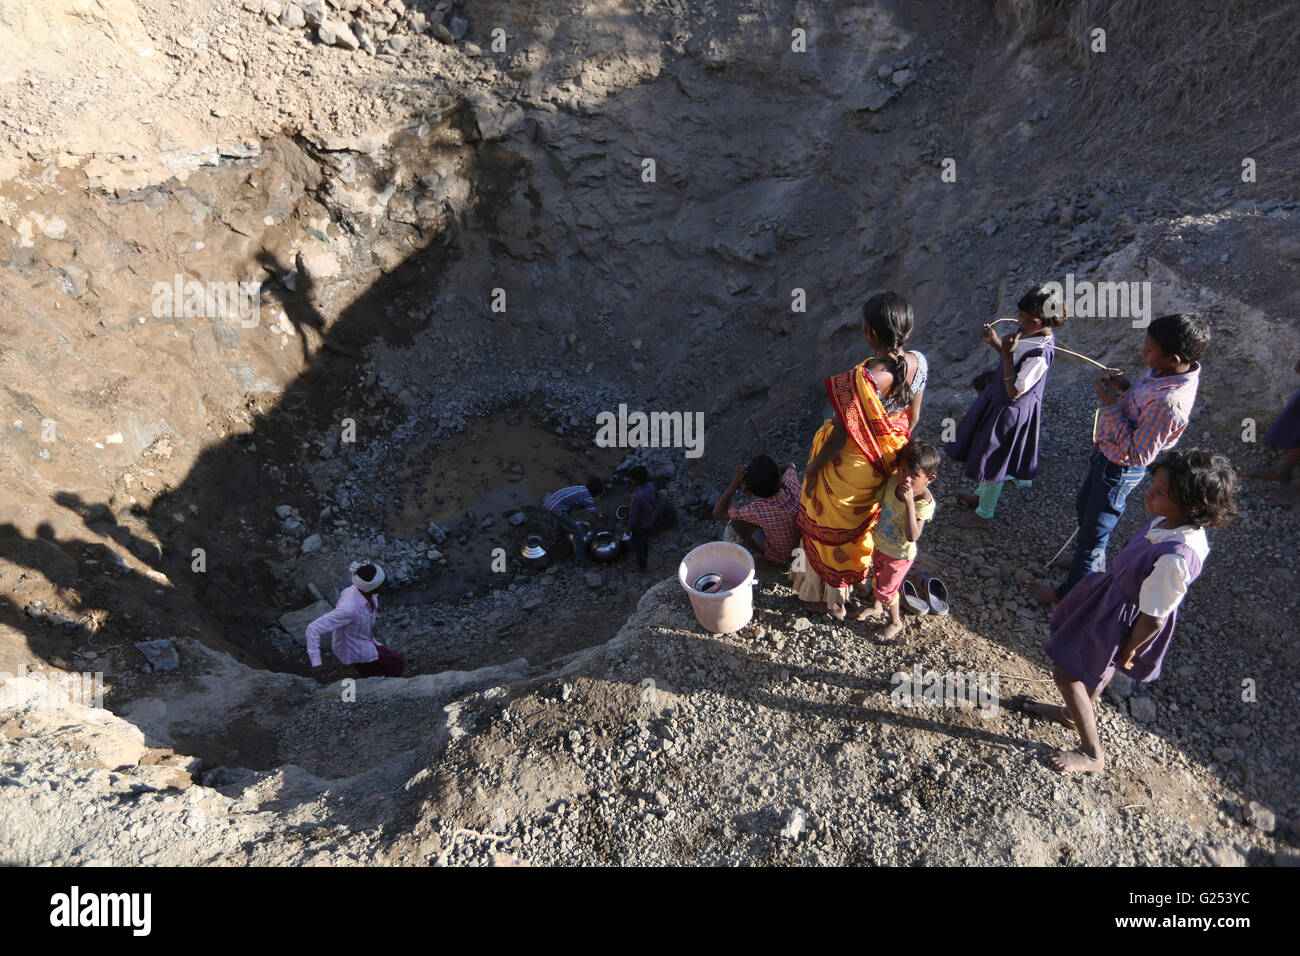 KOLAM tribu - la rareté de l'eau de séchage en source. - Shivshaktinagar Ghogarwadi - Maharashtra Banque D'Images